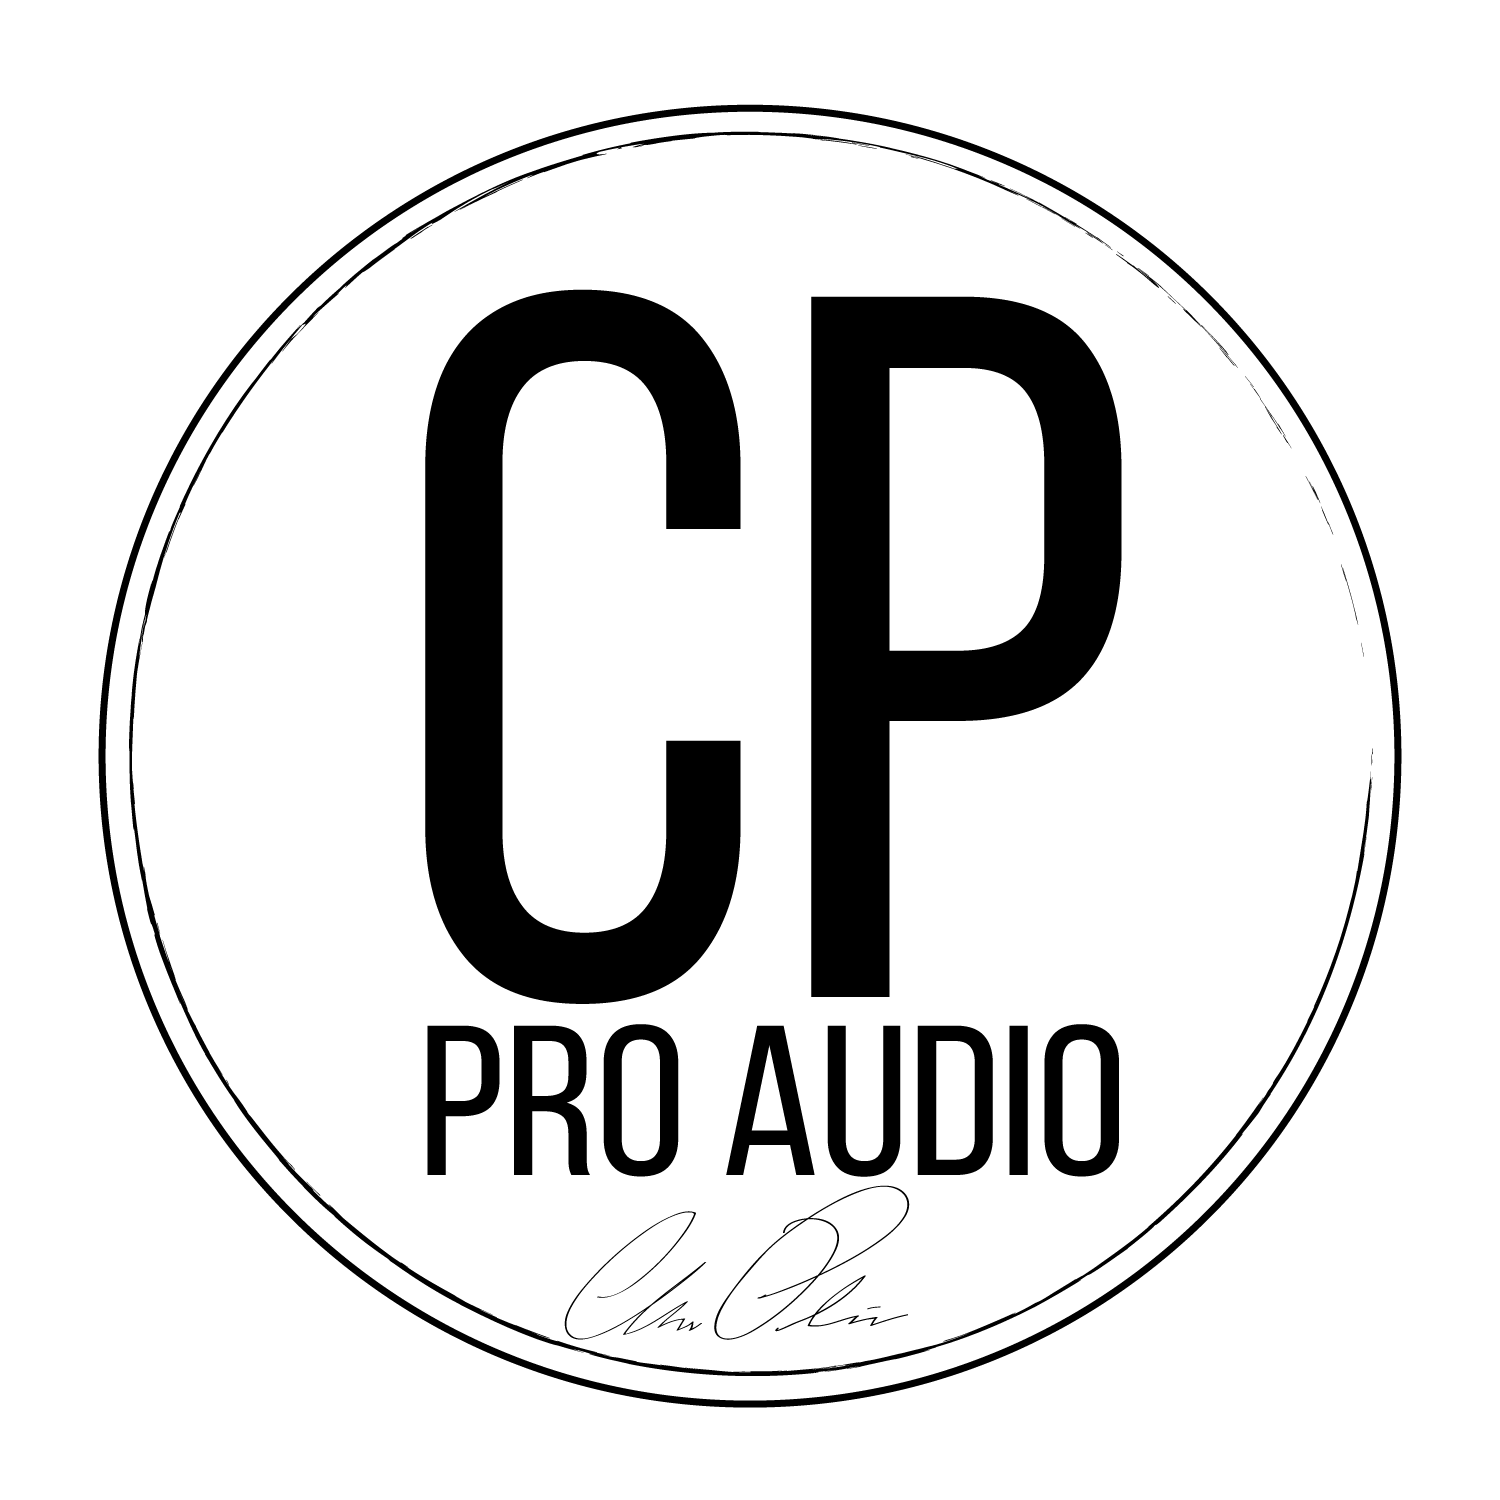 CP Pro Audio